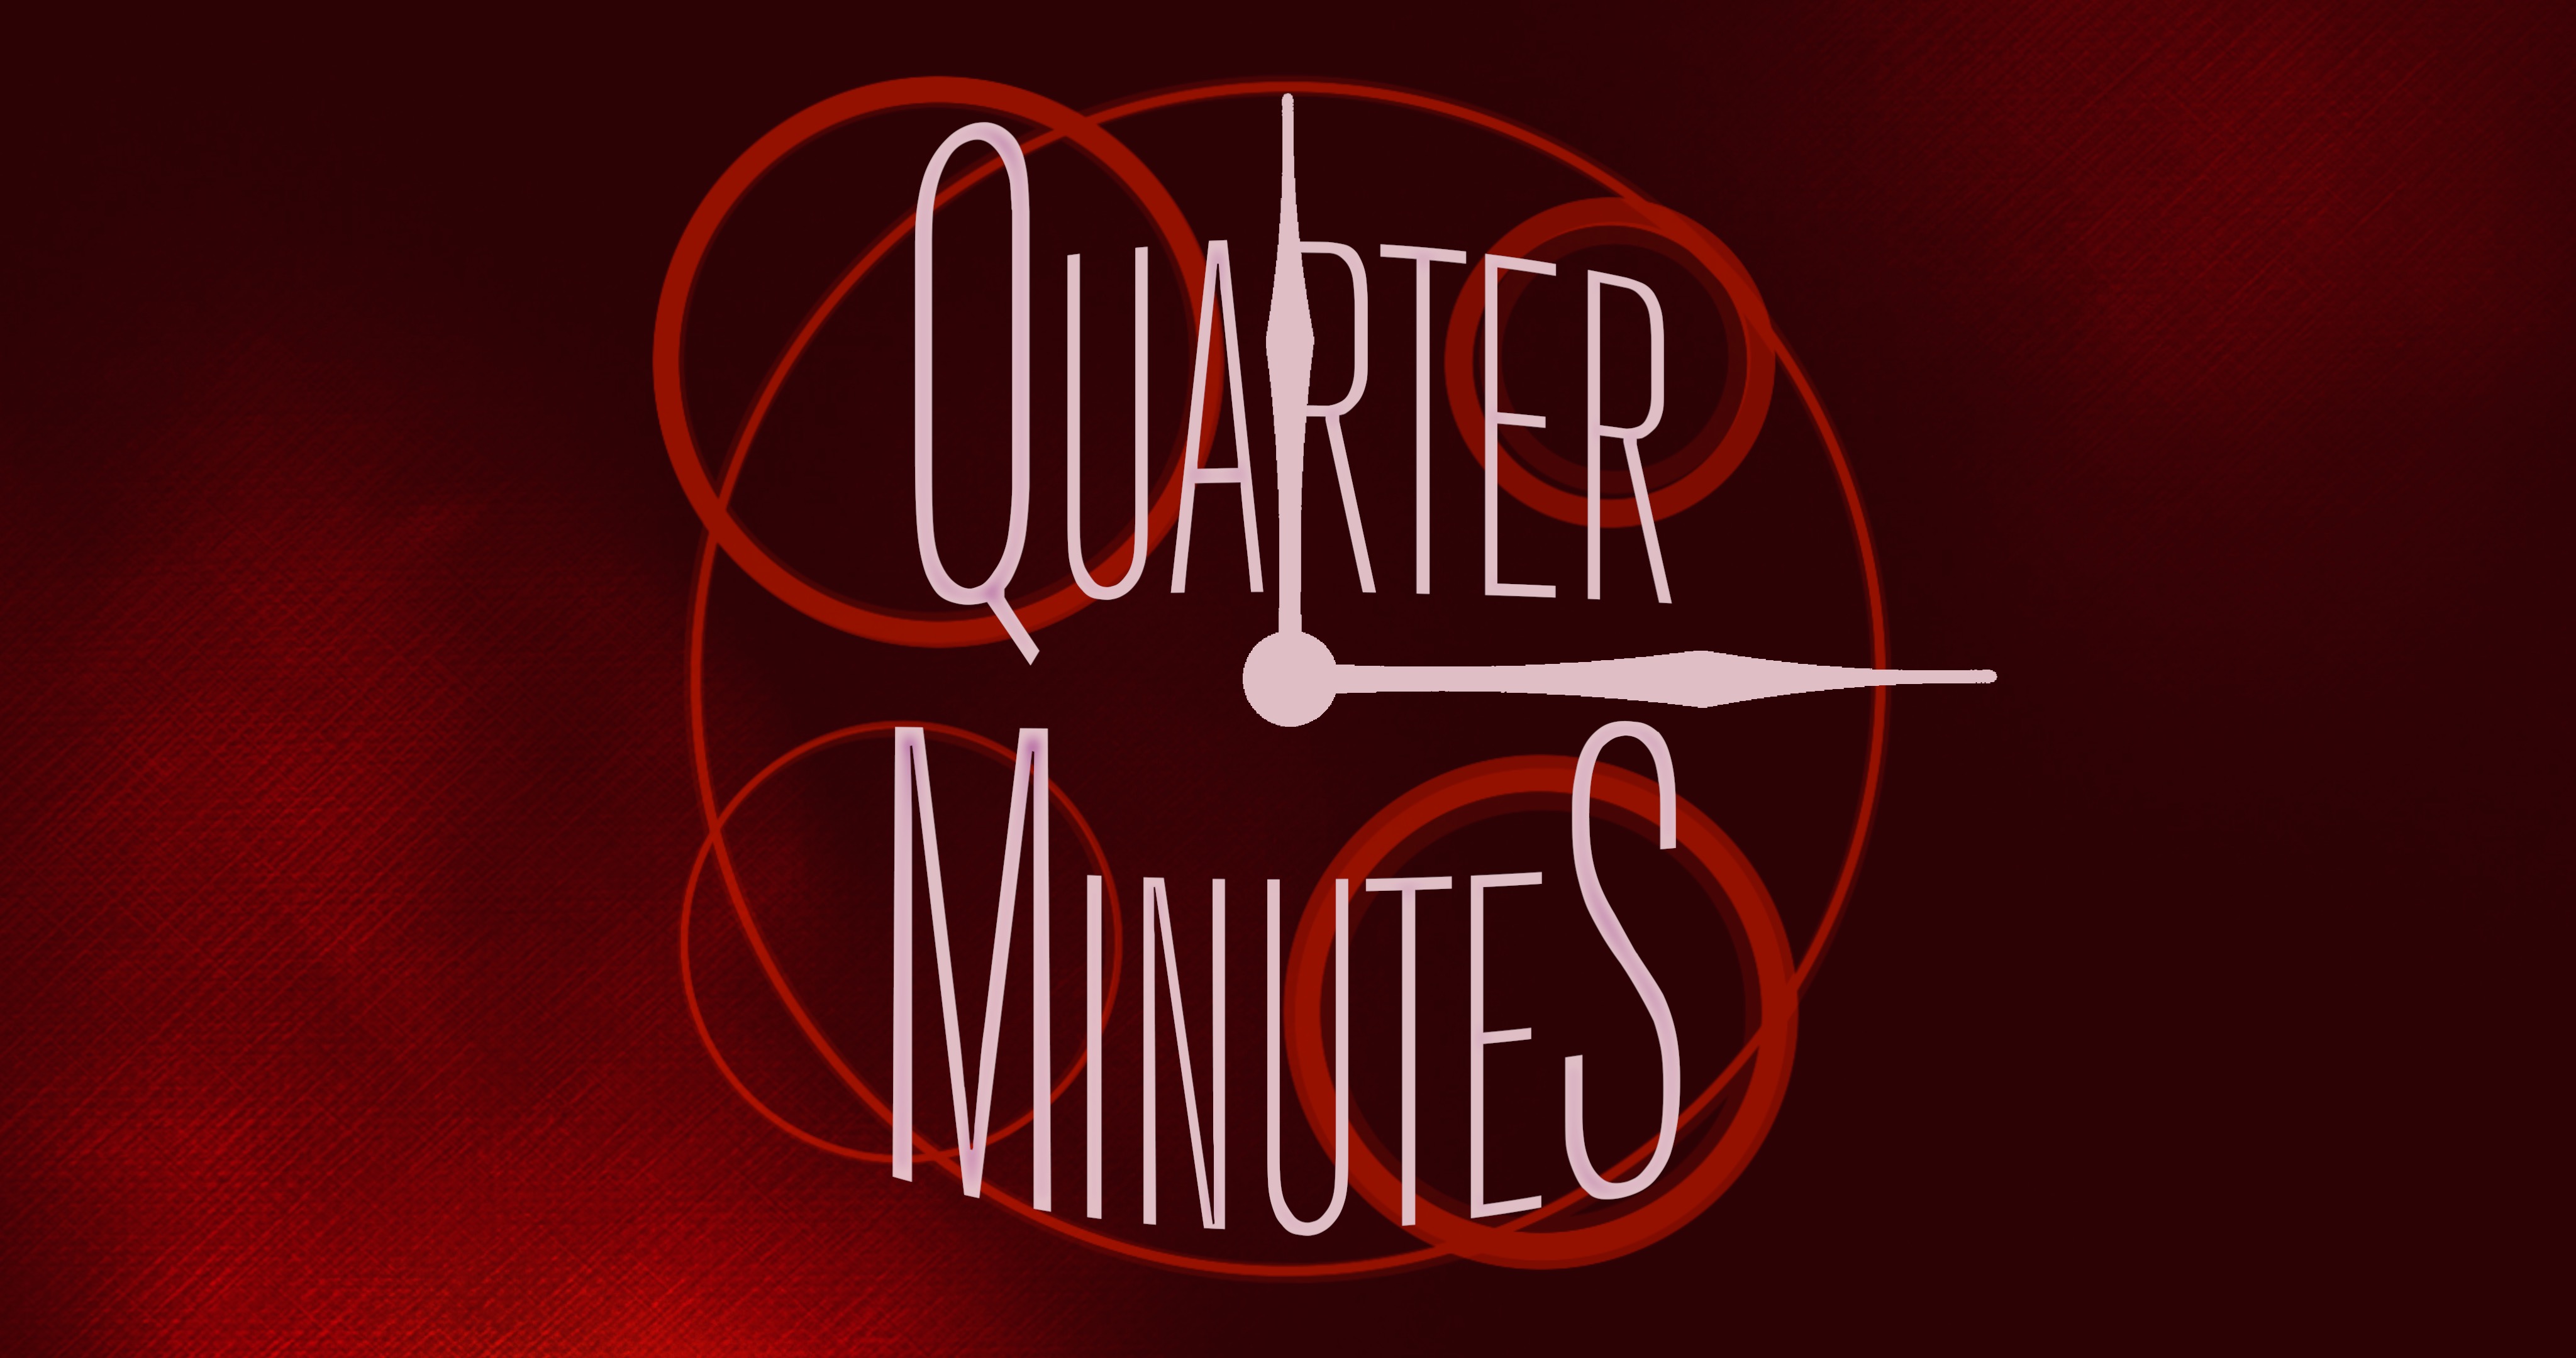 News – Quarter Minutes